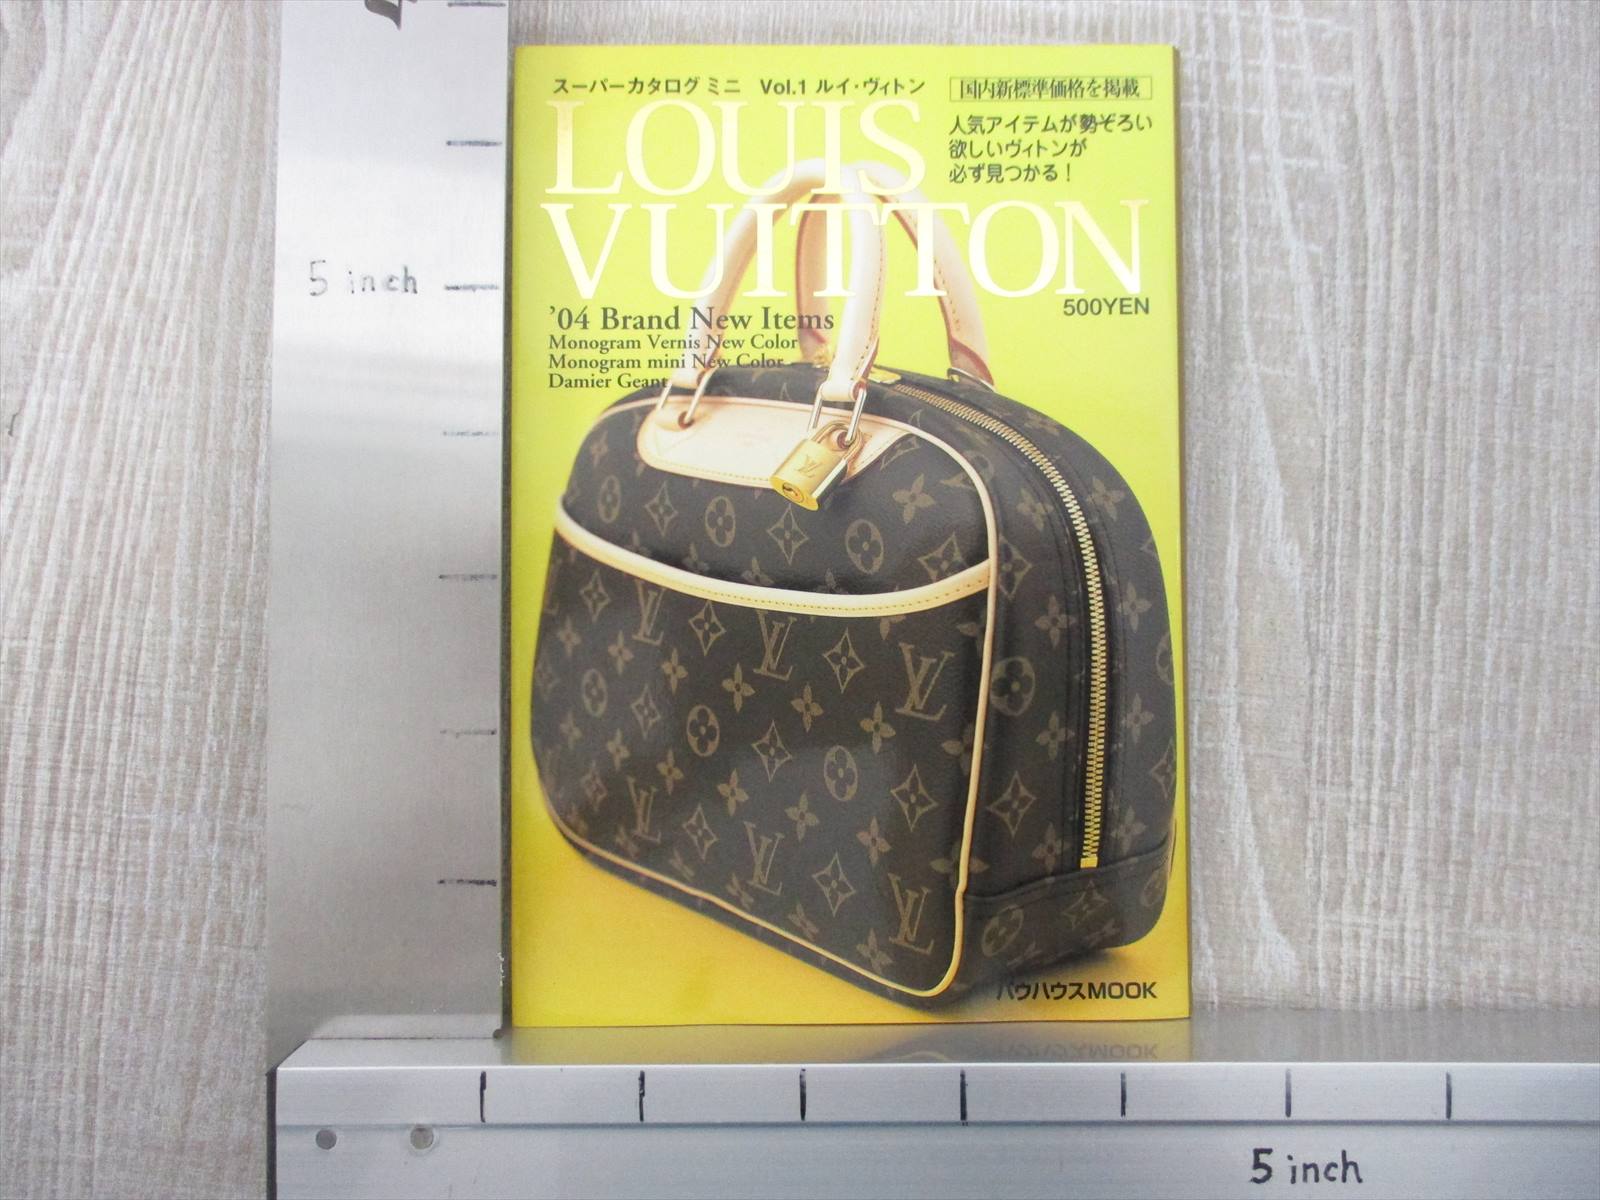 LOUIS VUITTON 2004 Super Catalog Mini Art Photo Guide Book | eBay